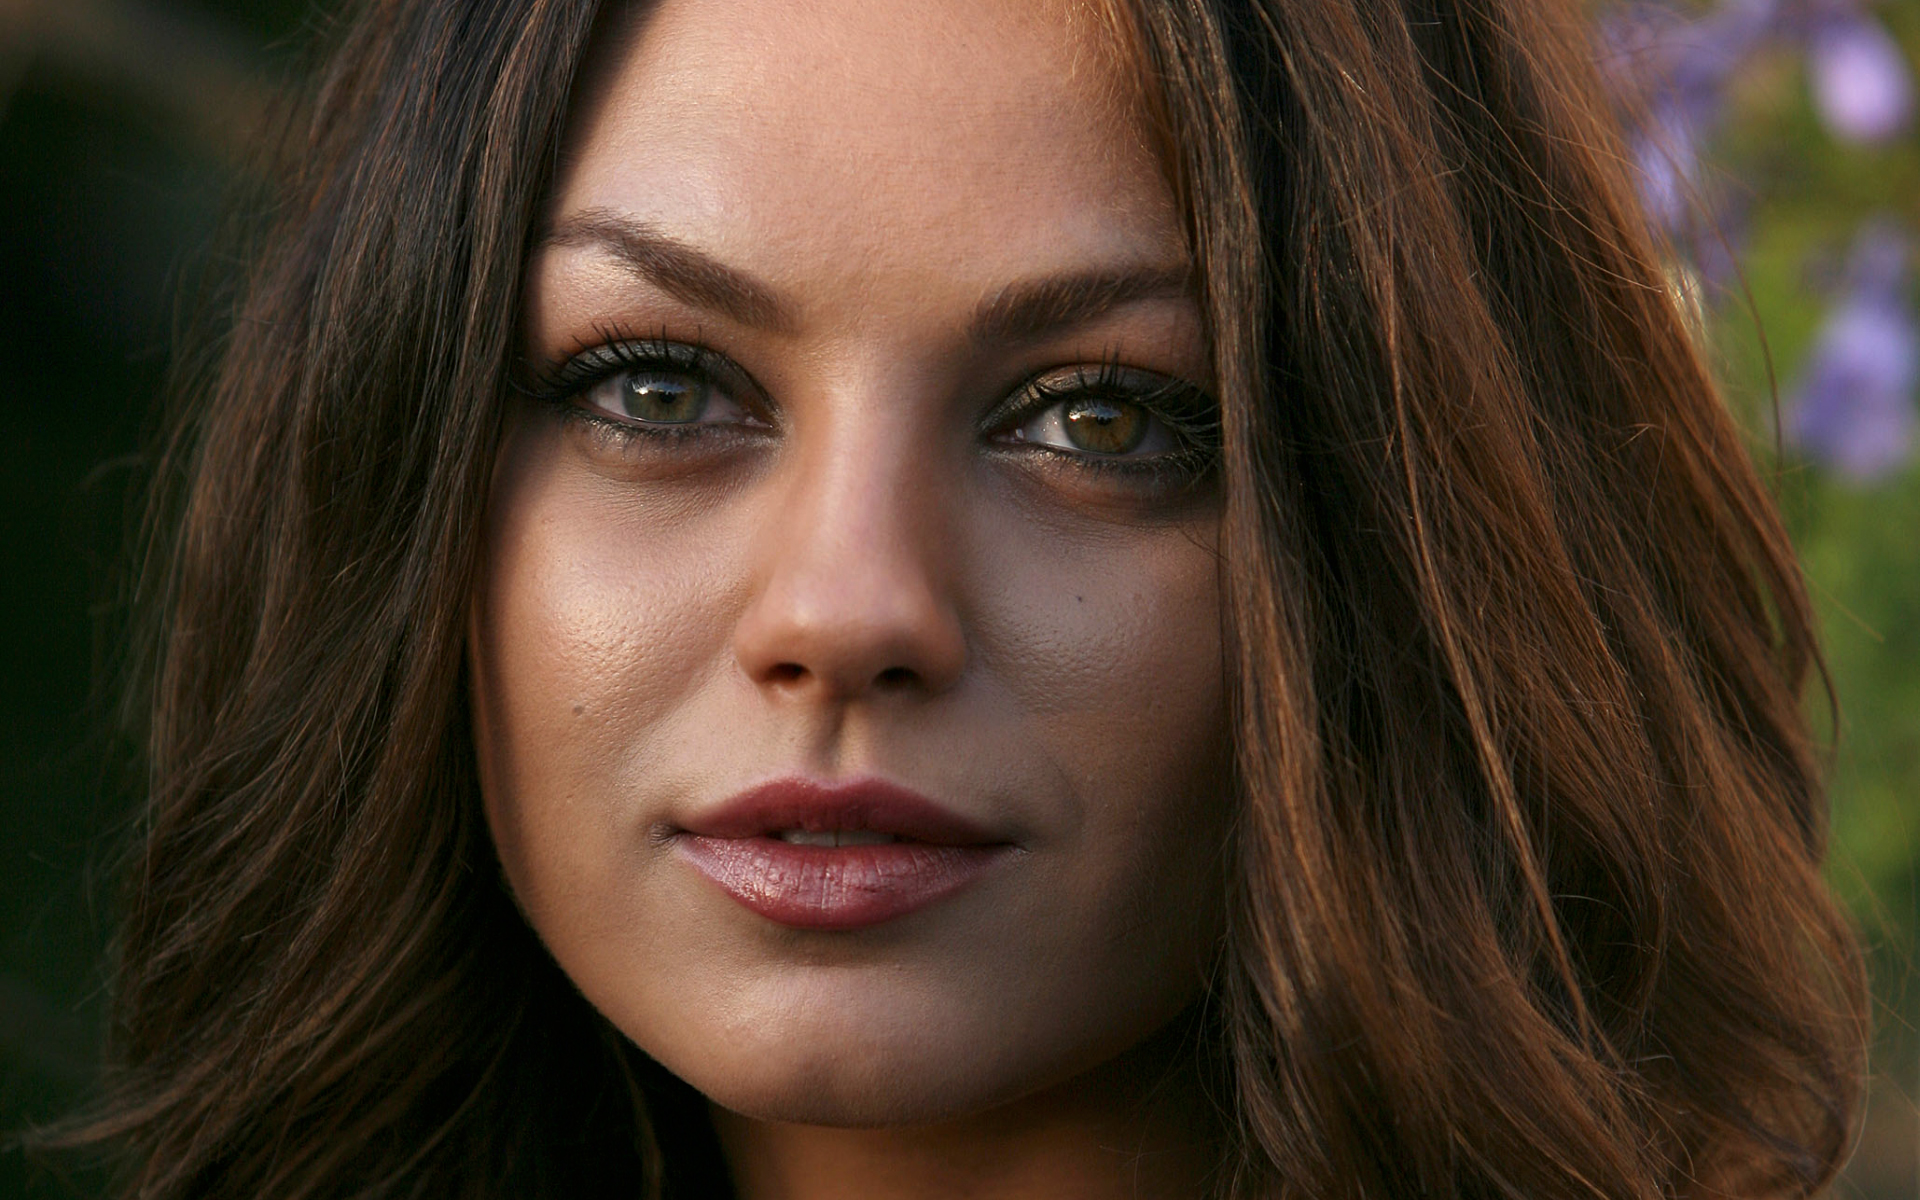 women, Mila Kunis, actress, faces - desktop wallpaper